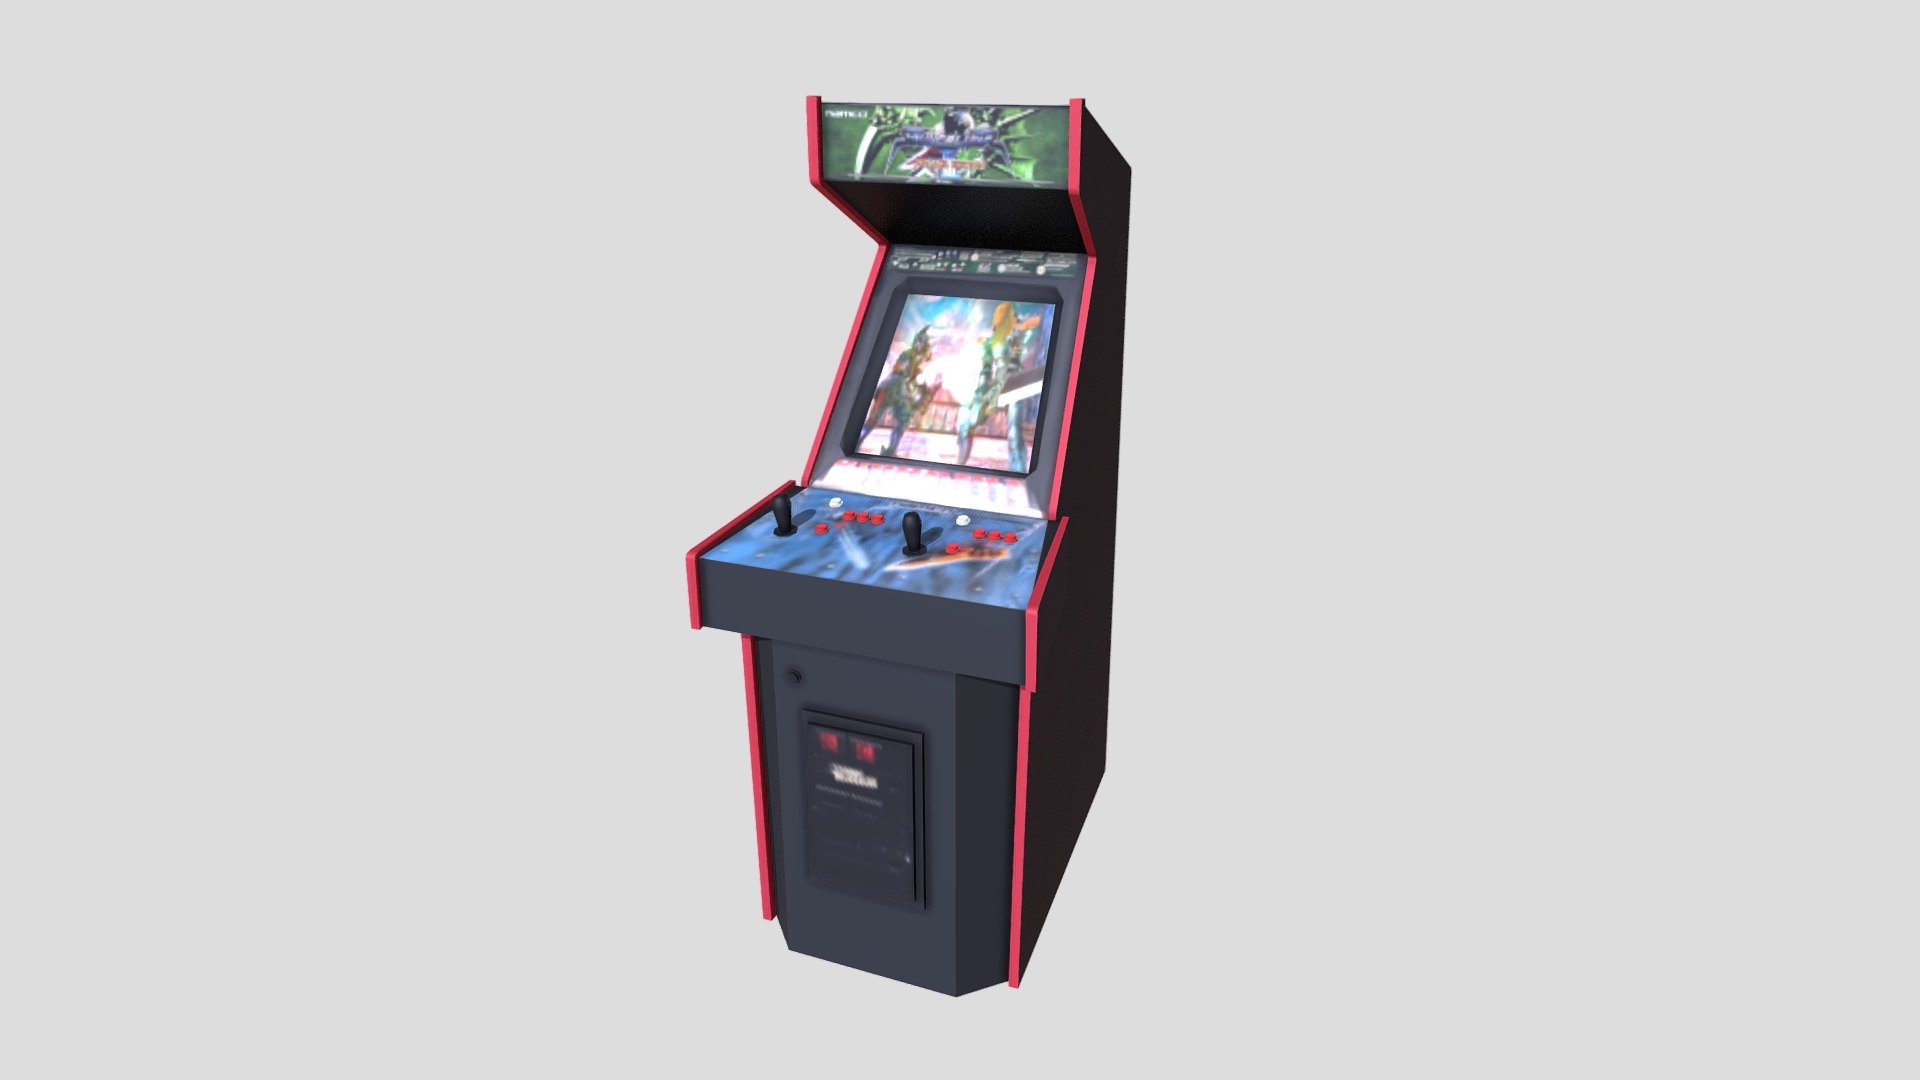 Soulcalibur 3 Arcade Cabinet